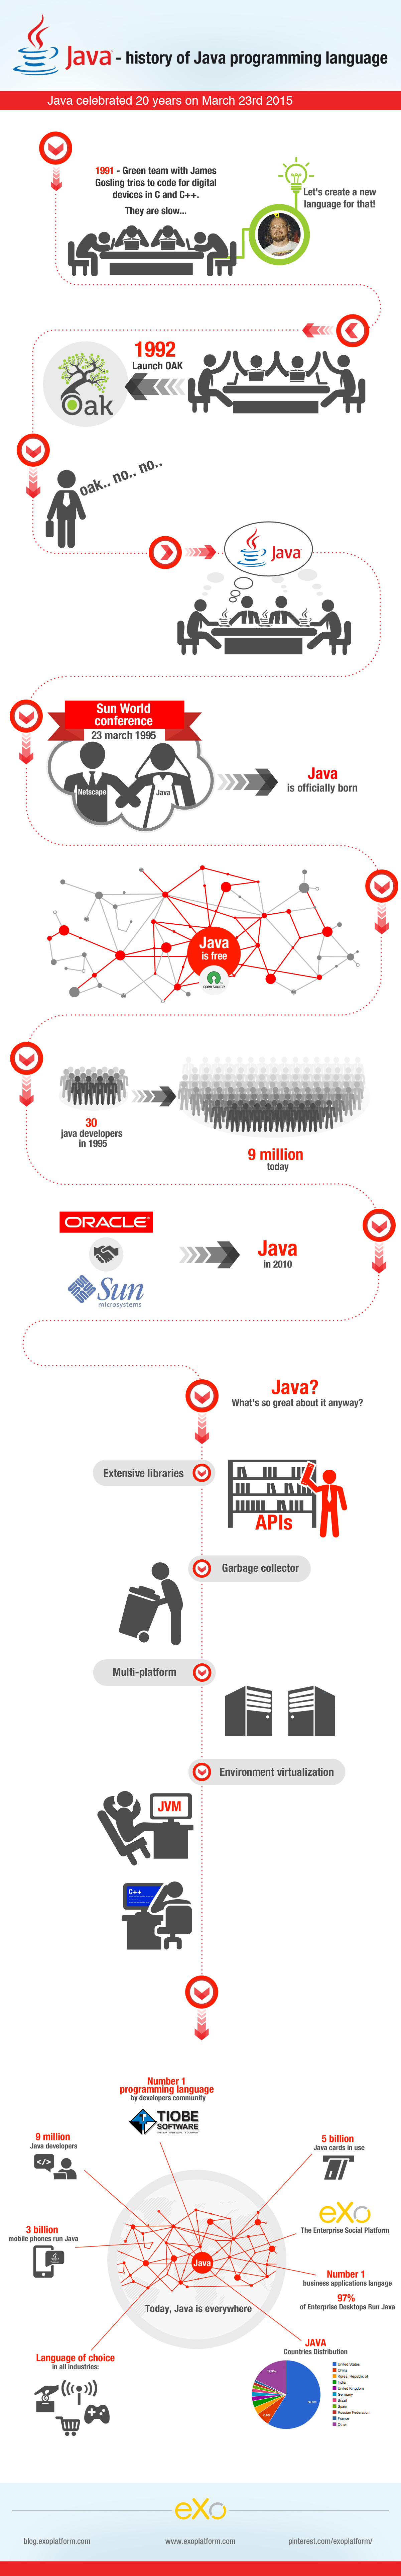 The History of the Java Programming Language